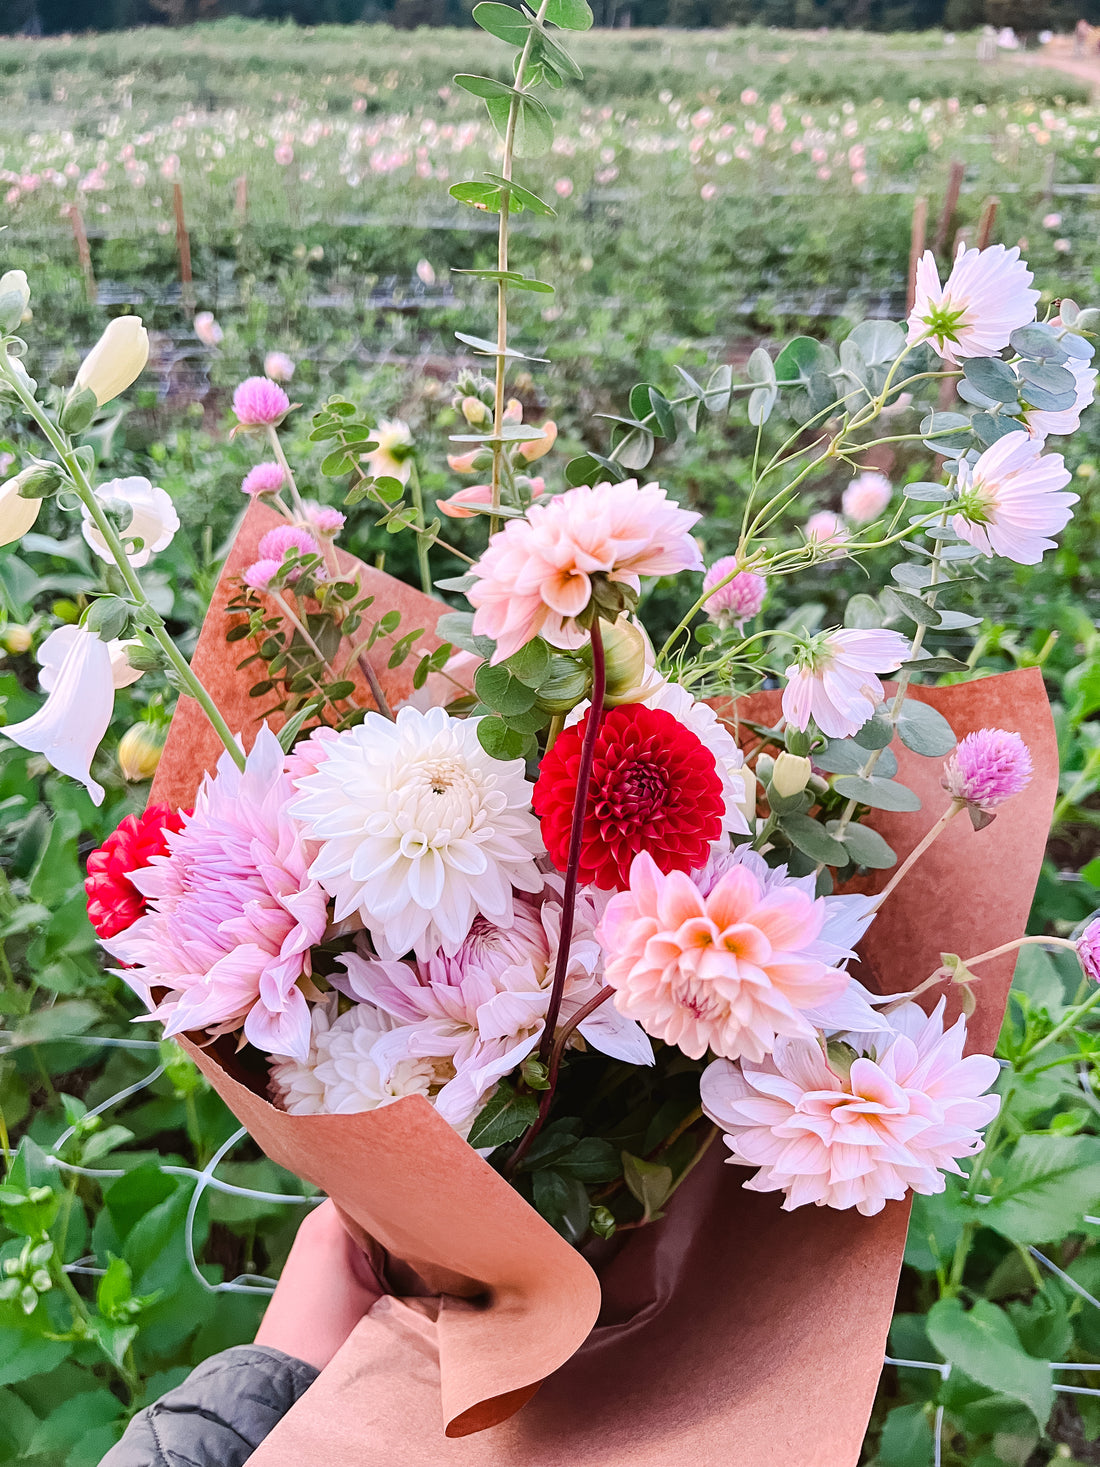 Floral Diary: Cross Street Flower Farm Tour & Make-Your-Own-Bouquet